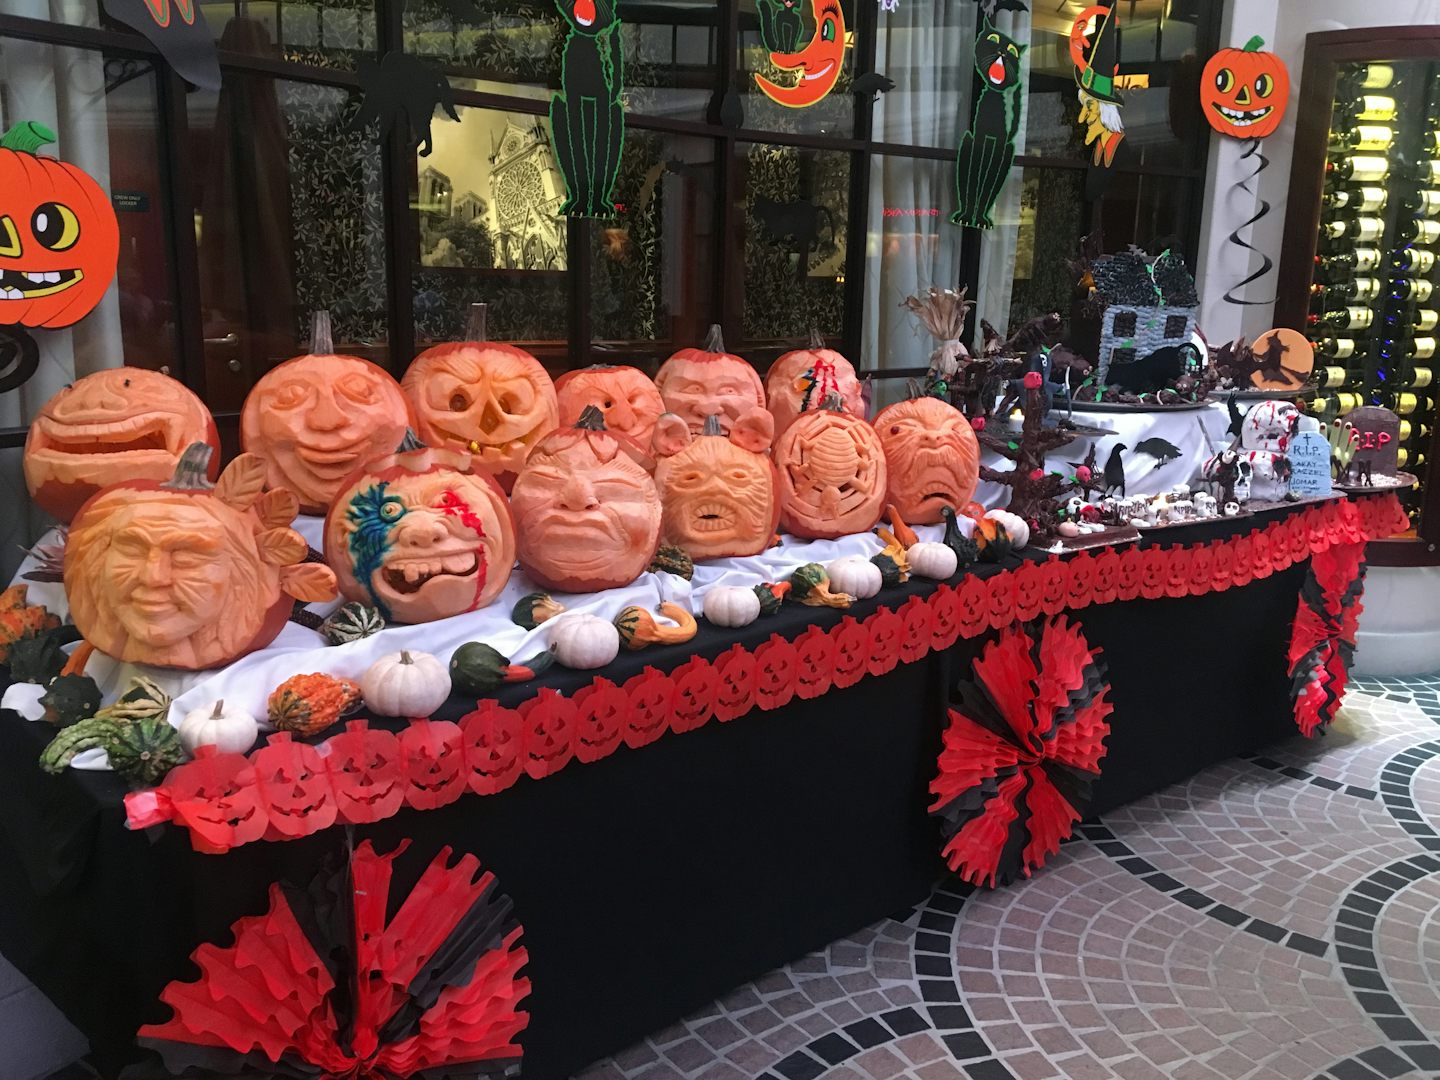 Halloween pumpkin carvings by restaurant staff.